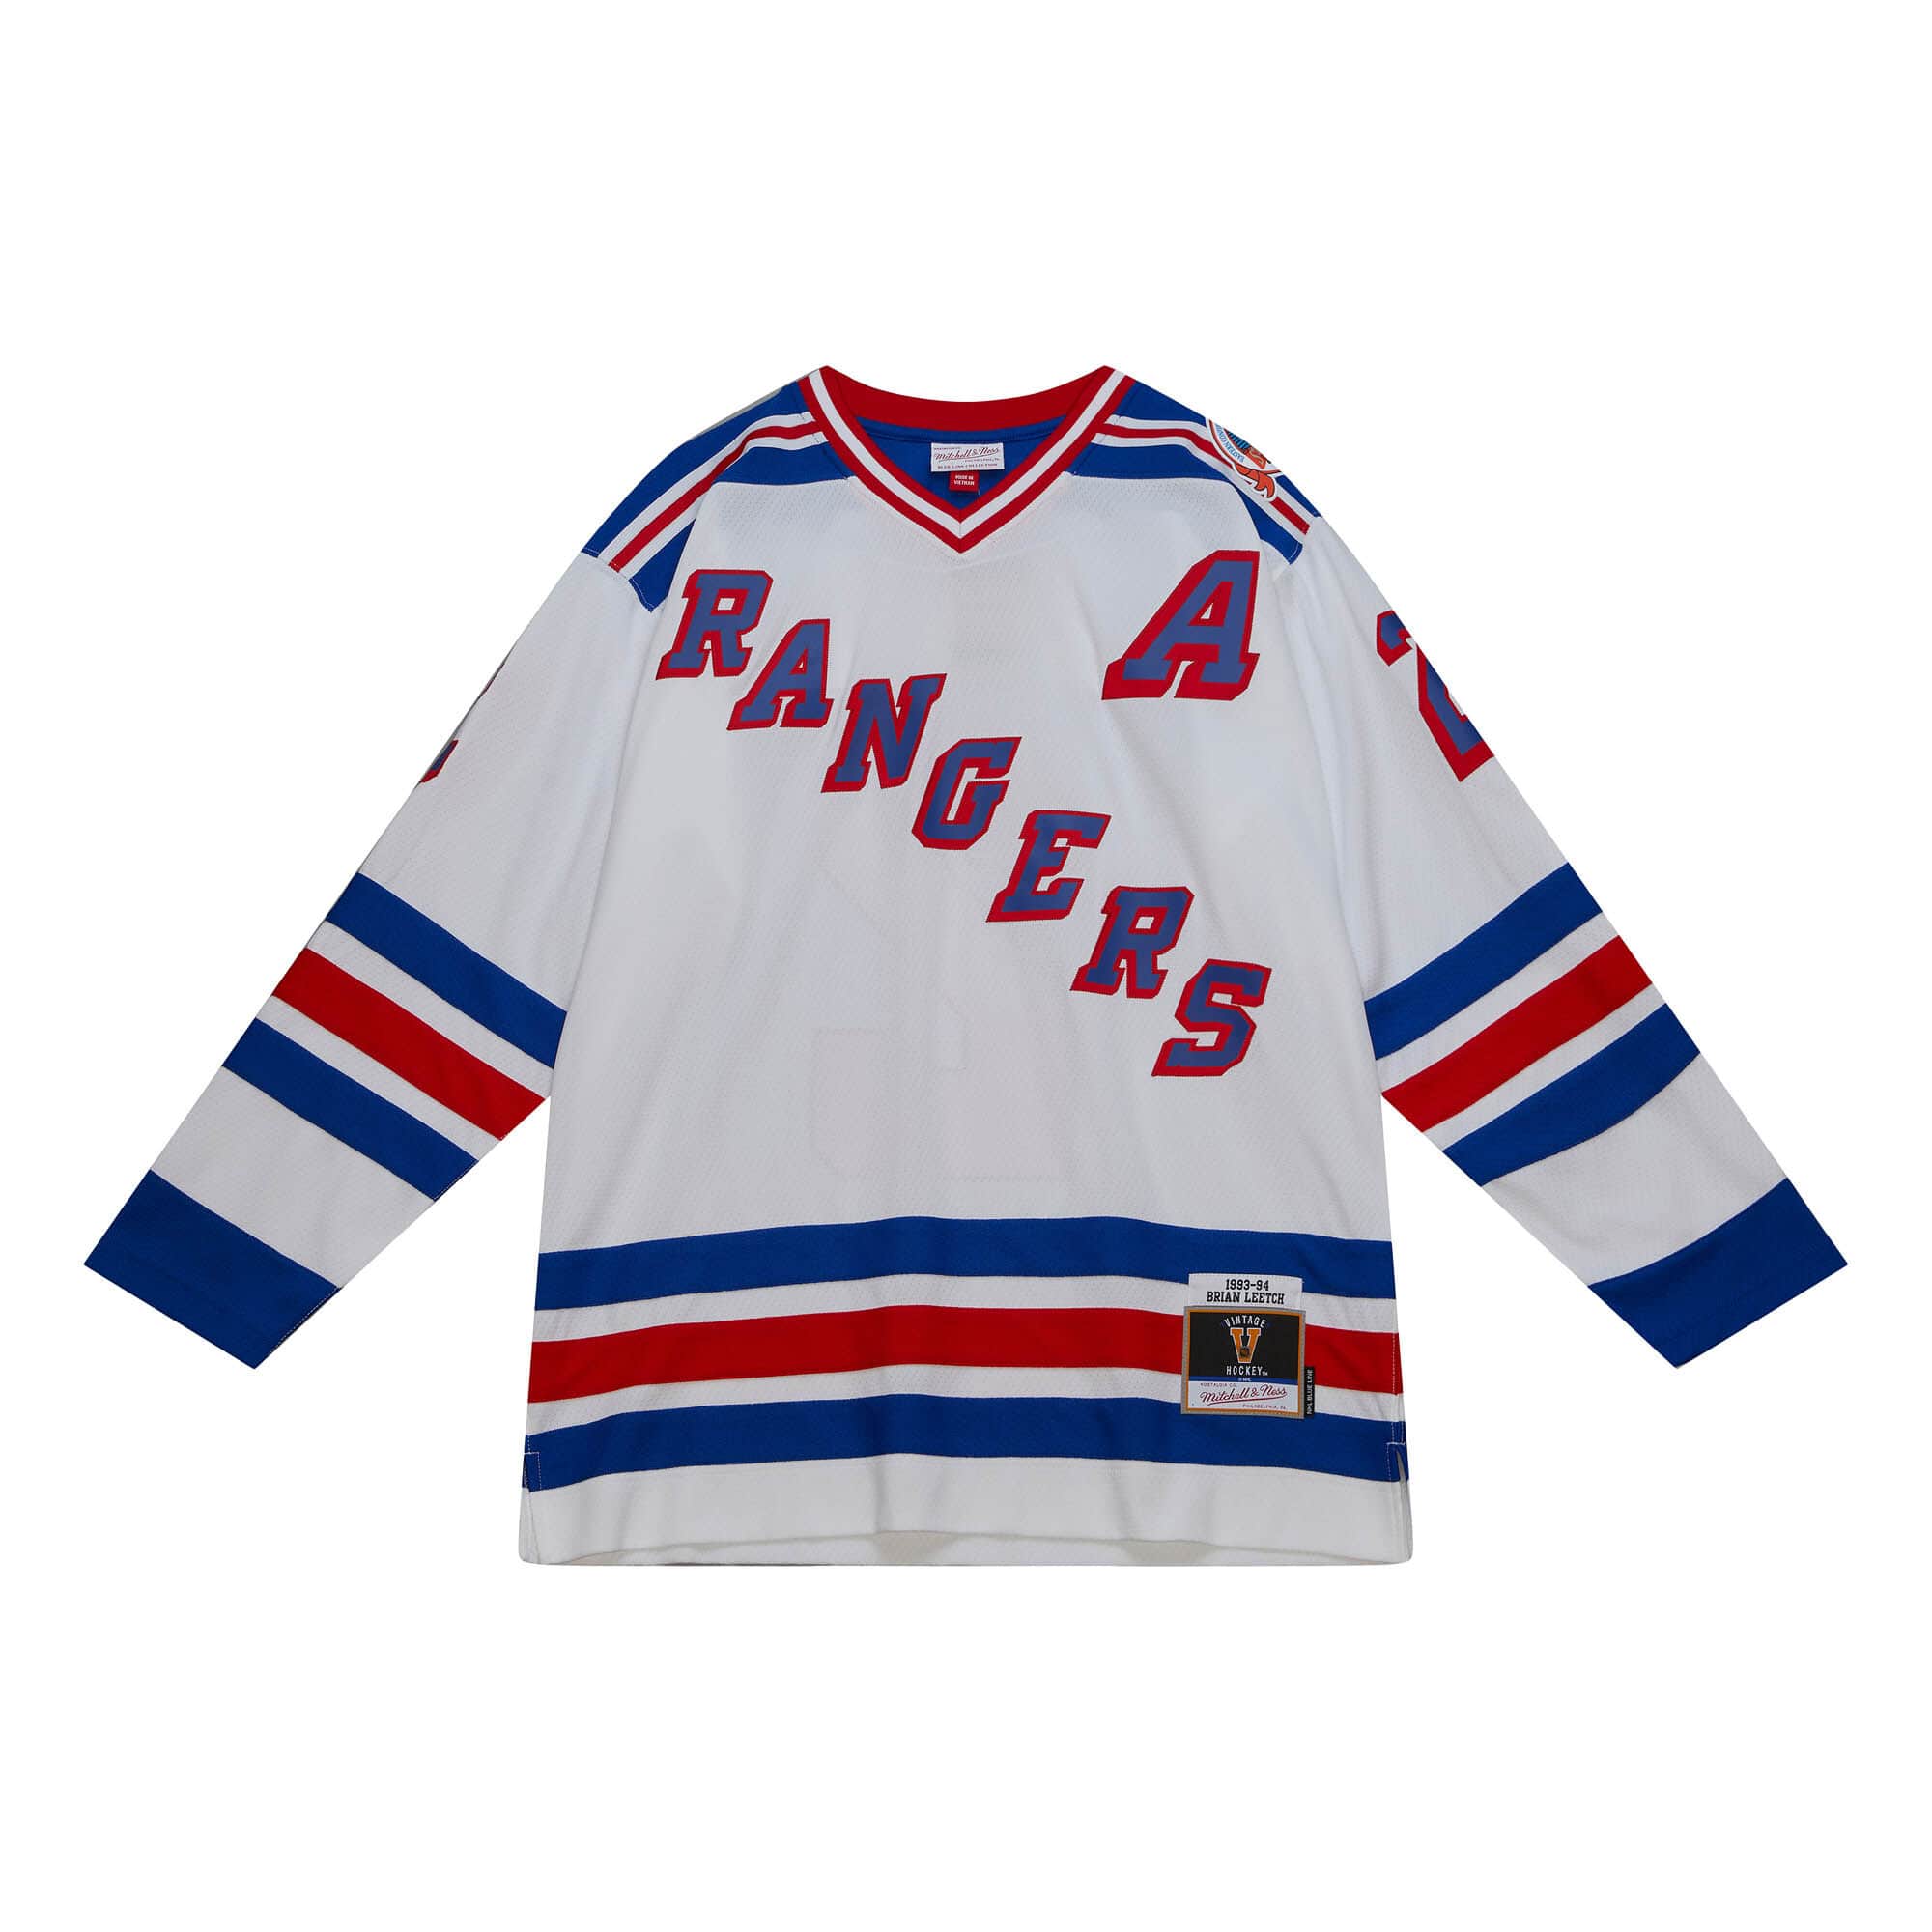  Cheap Authentic Hockey Jersey